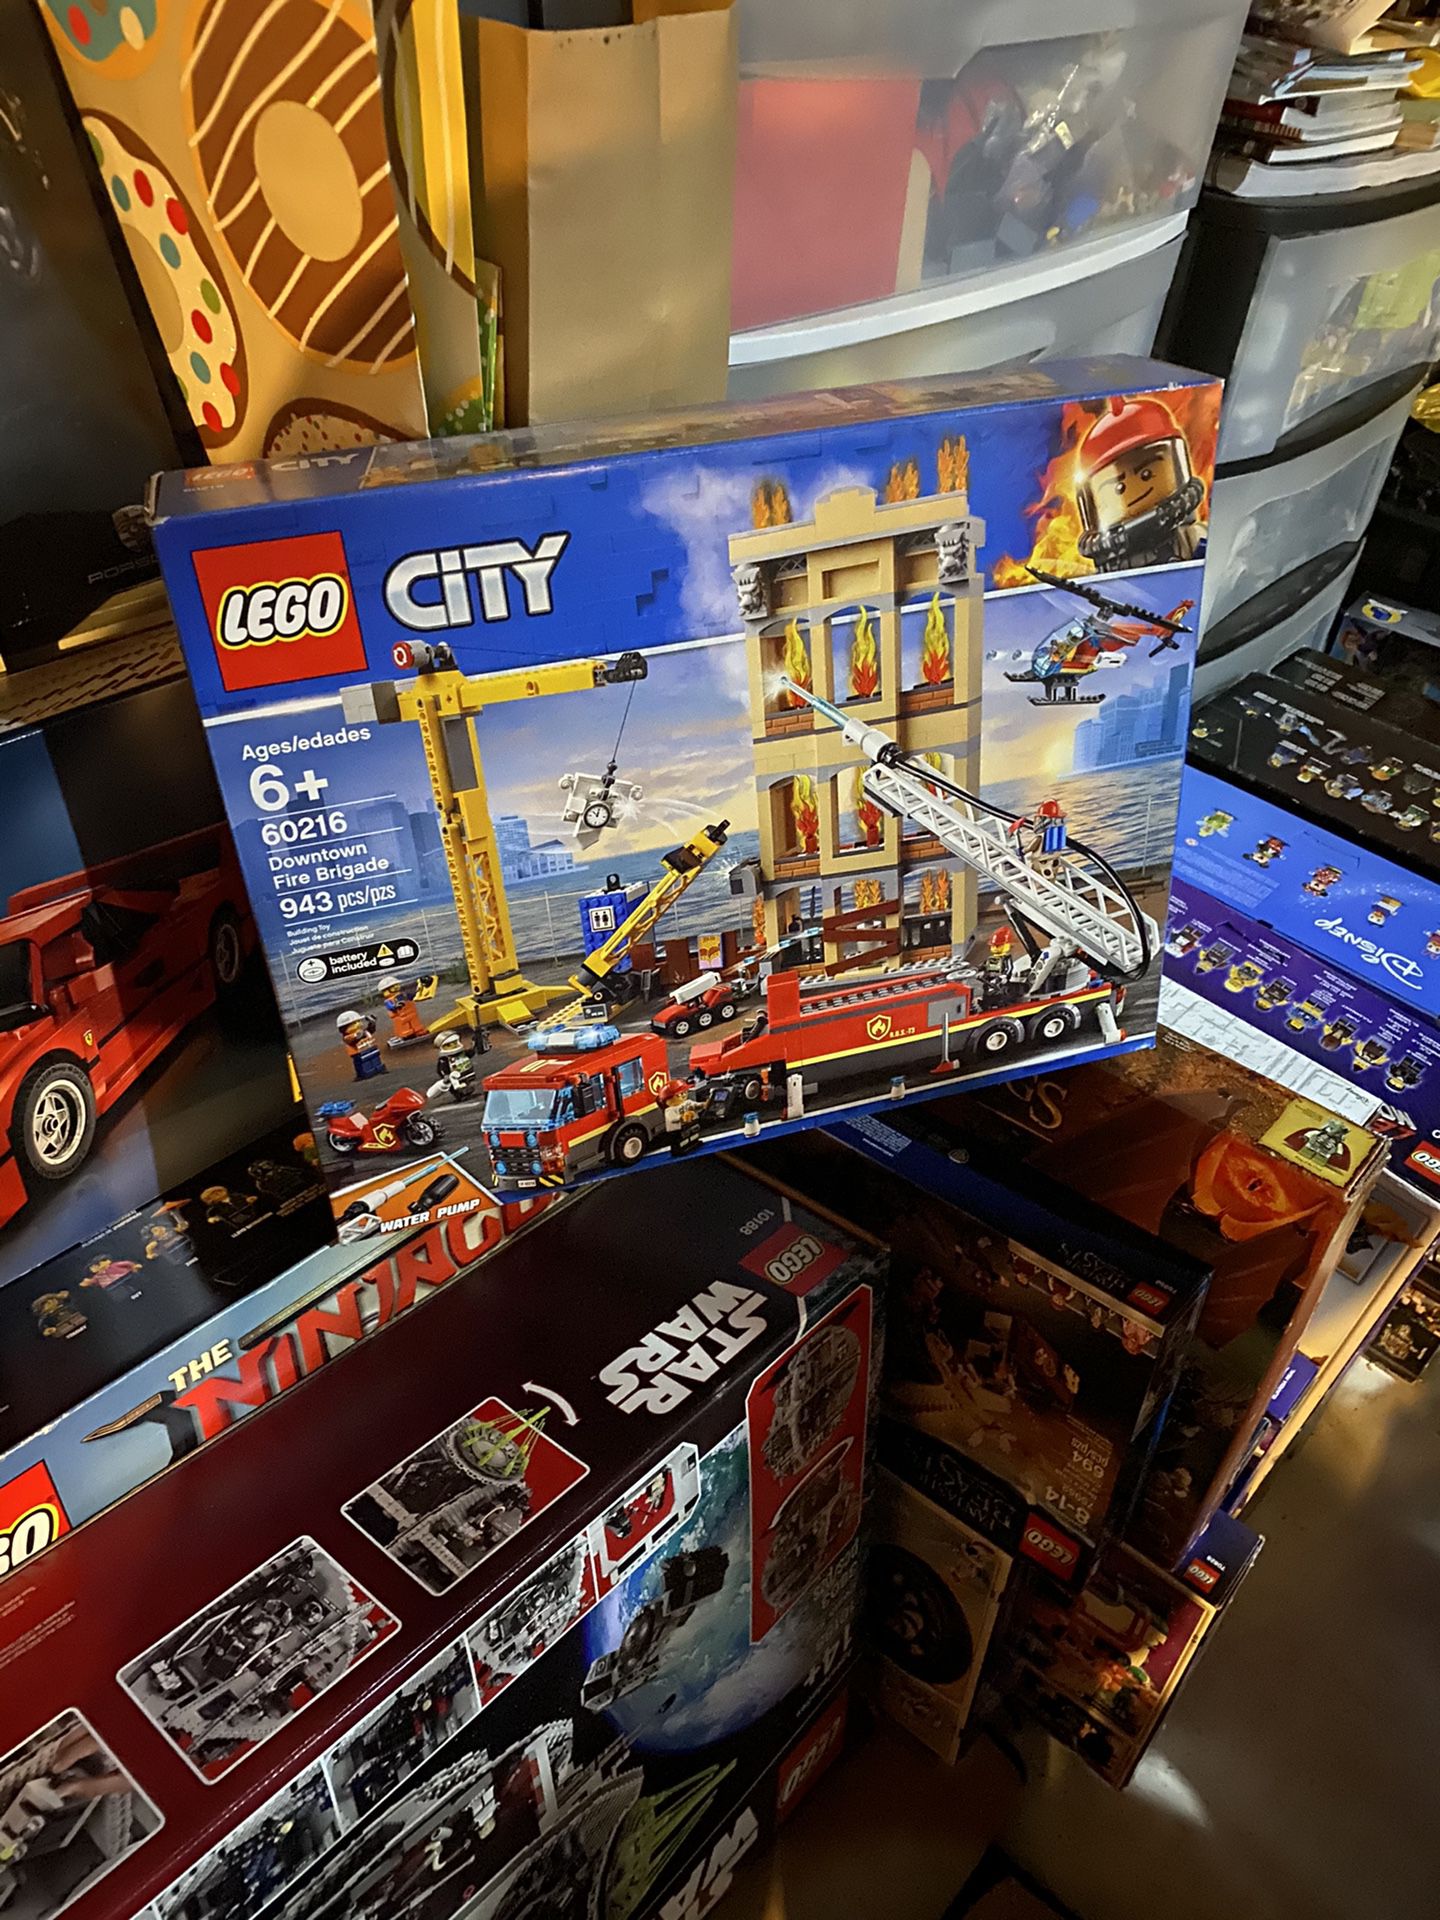 60216 LEGO downtown fire brigade